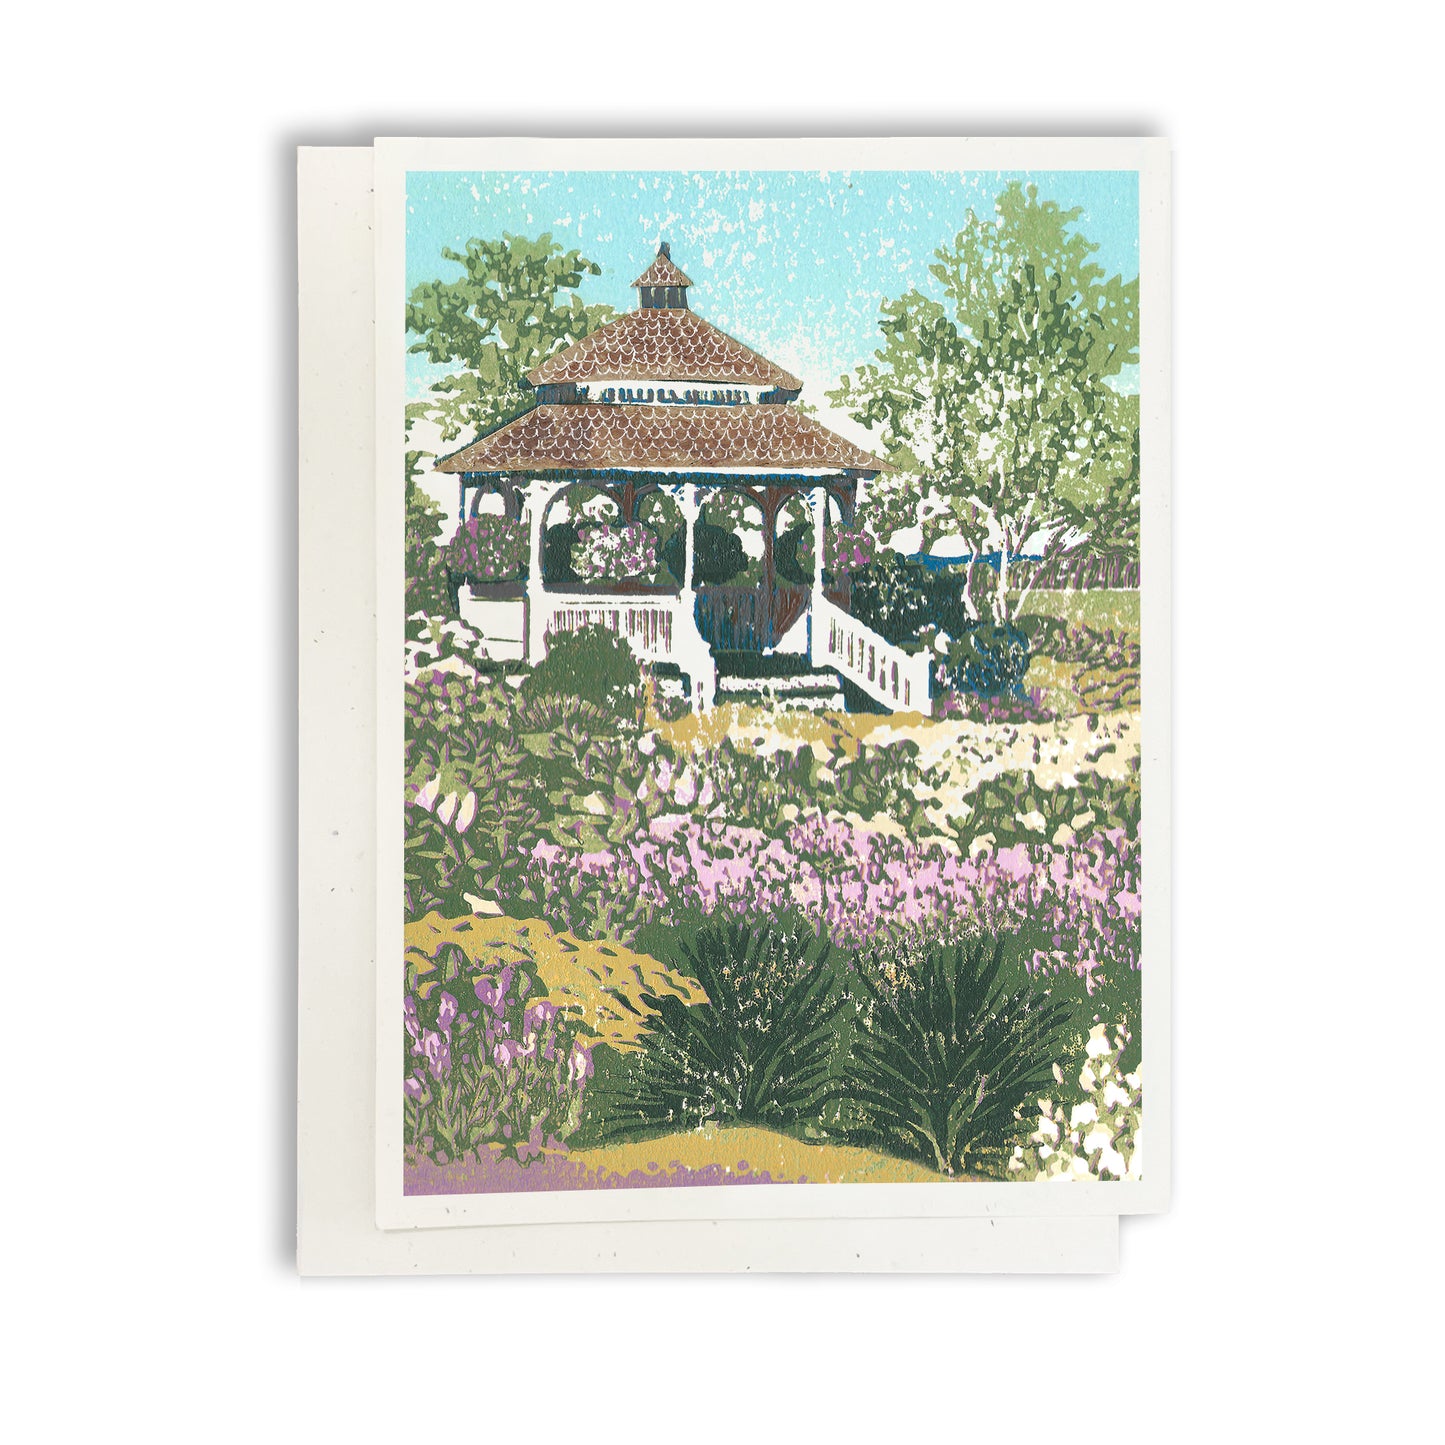 A casually elegant card featuring Mackinac Island art by Natalia Wohletz of Peninsula Prints title Mission Point Gazebo.